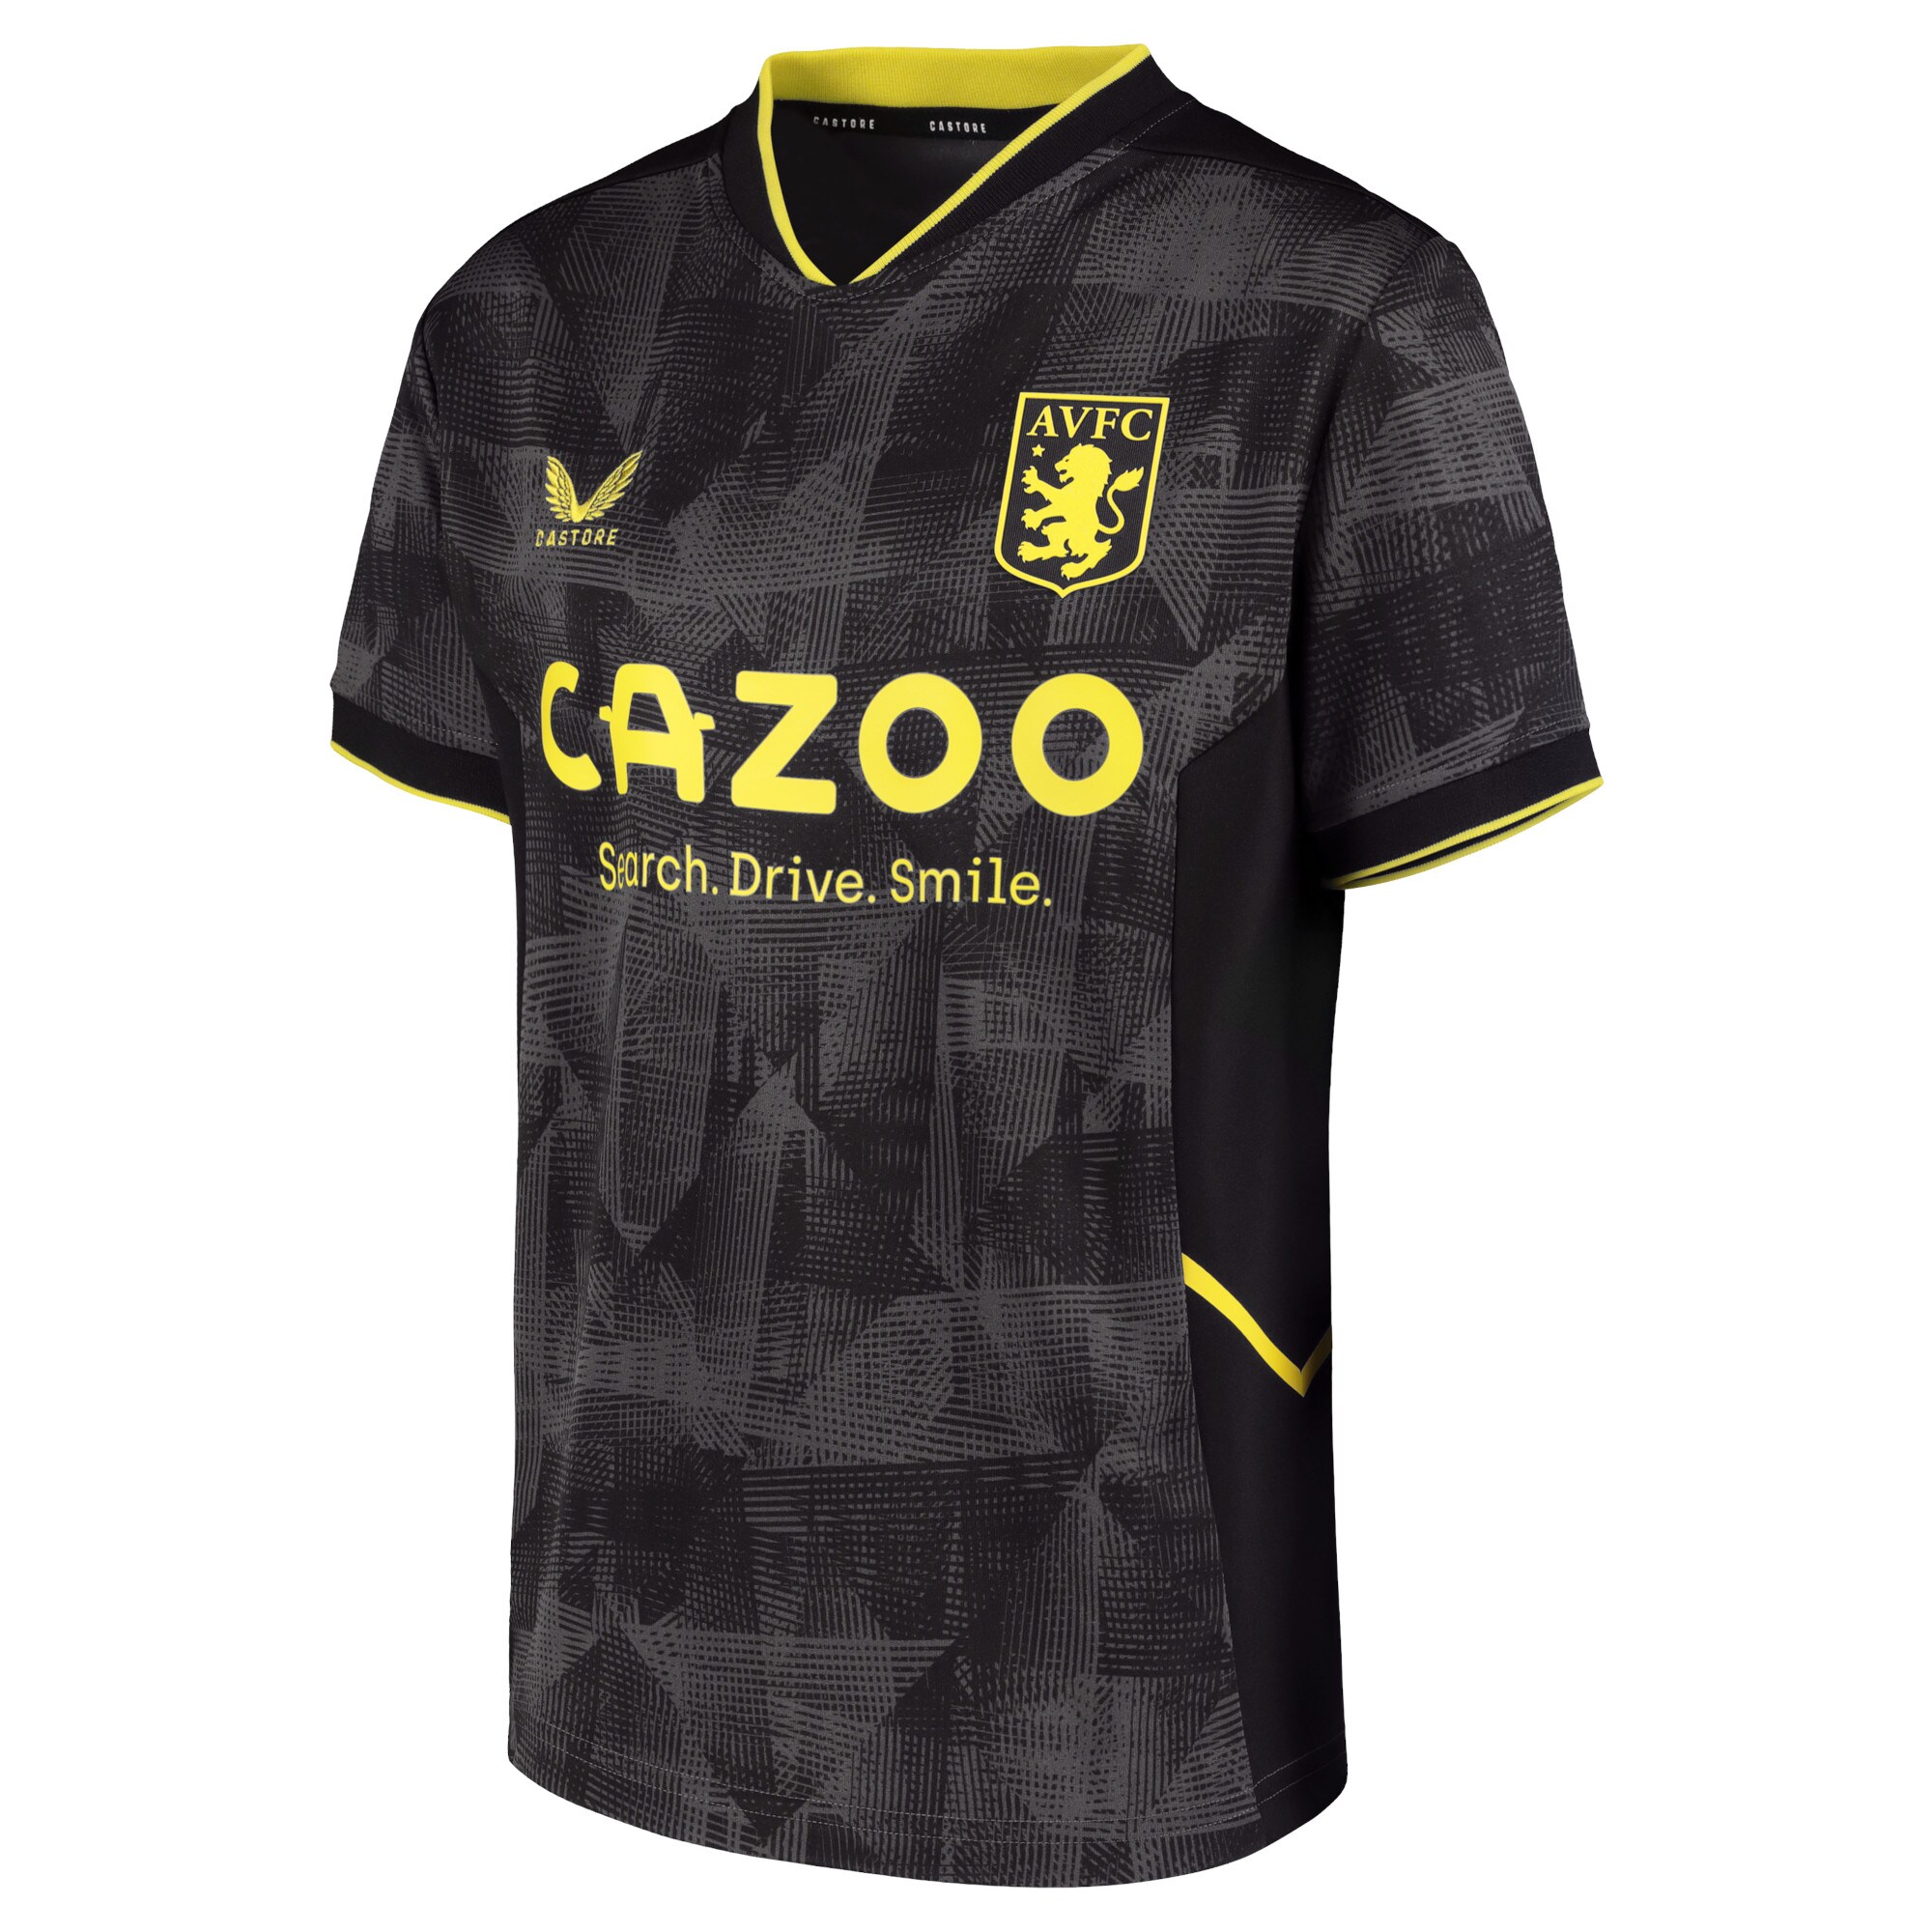 Aston Villa Cup Third Shirt 2022-23 with J. Ramsey 41 printing